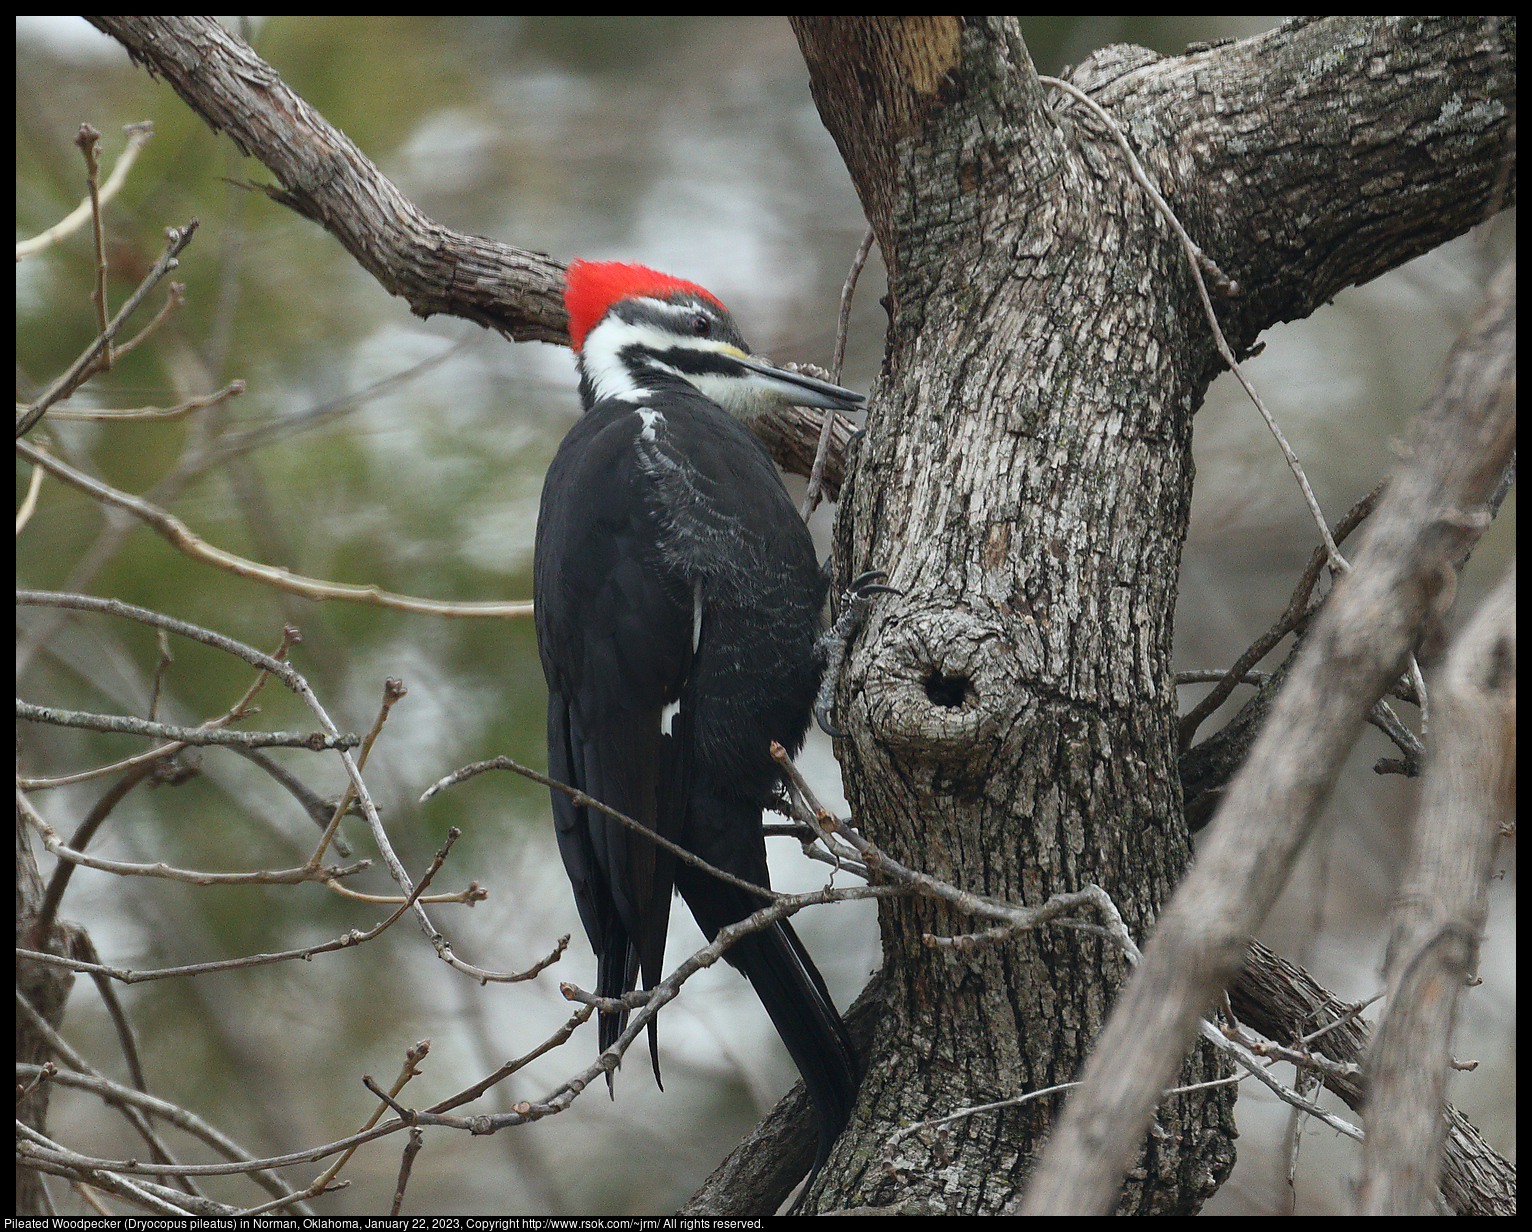 Pileated Woodpecker (Dryocopus pileatus) in Norman, Oklahoma, January 22, 2023